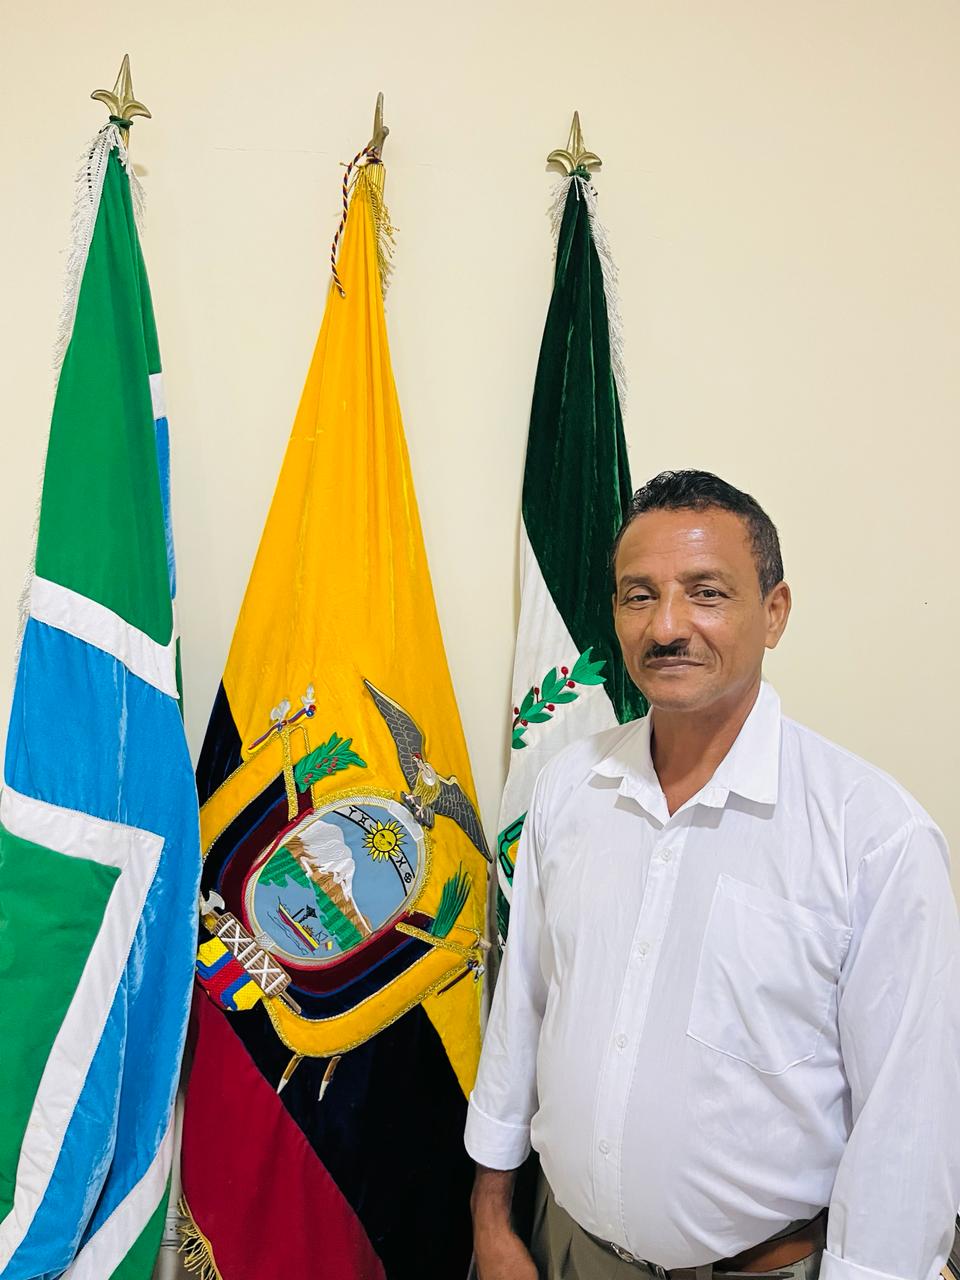 Sr. José Germán Mosquera Muñoz